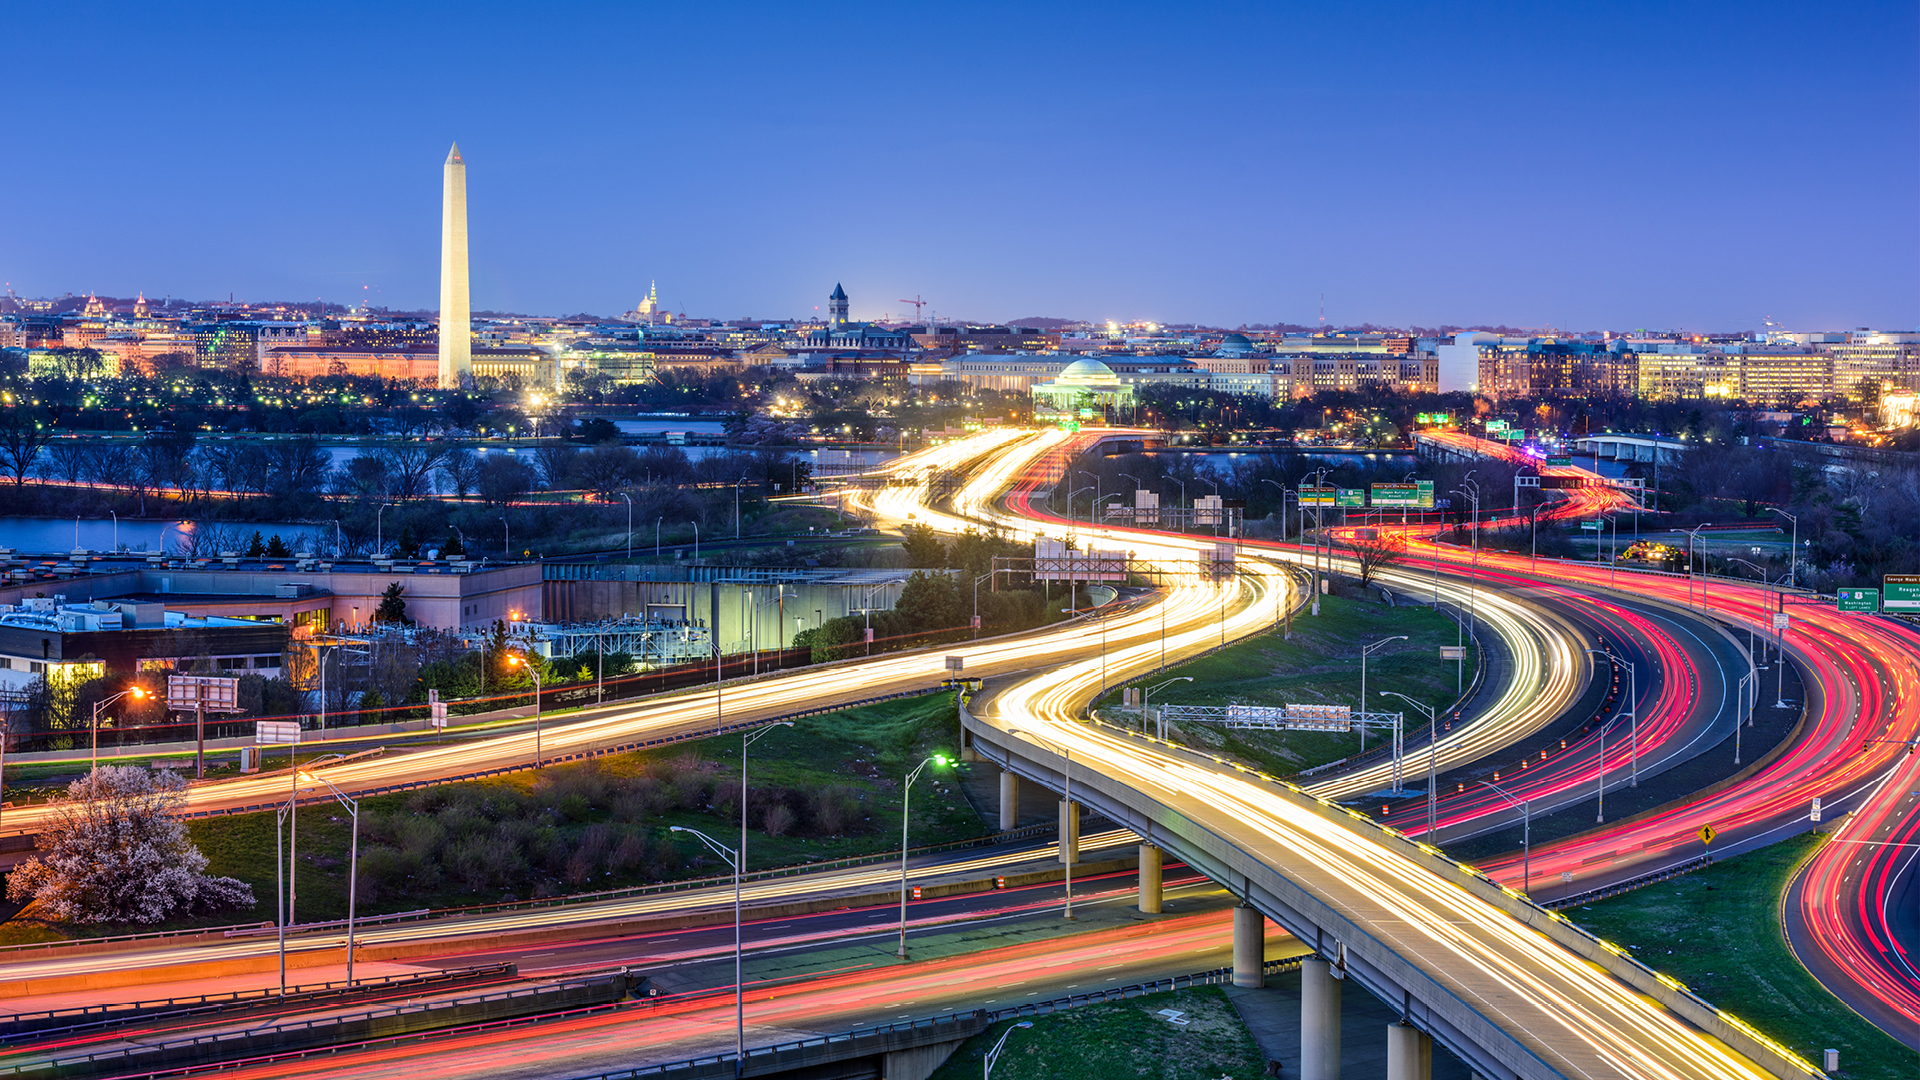 Washington, DC infrastructure at night